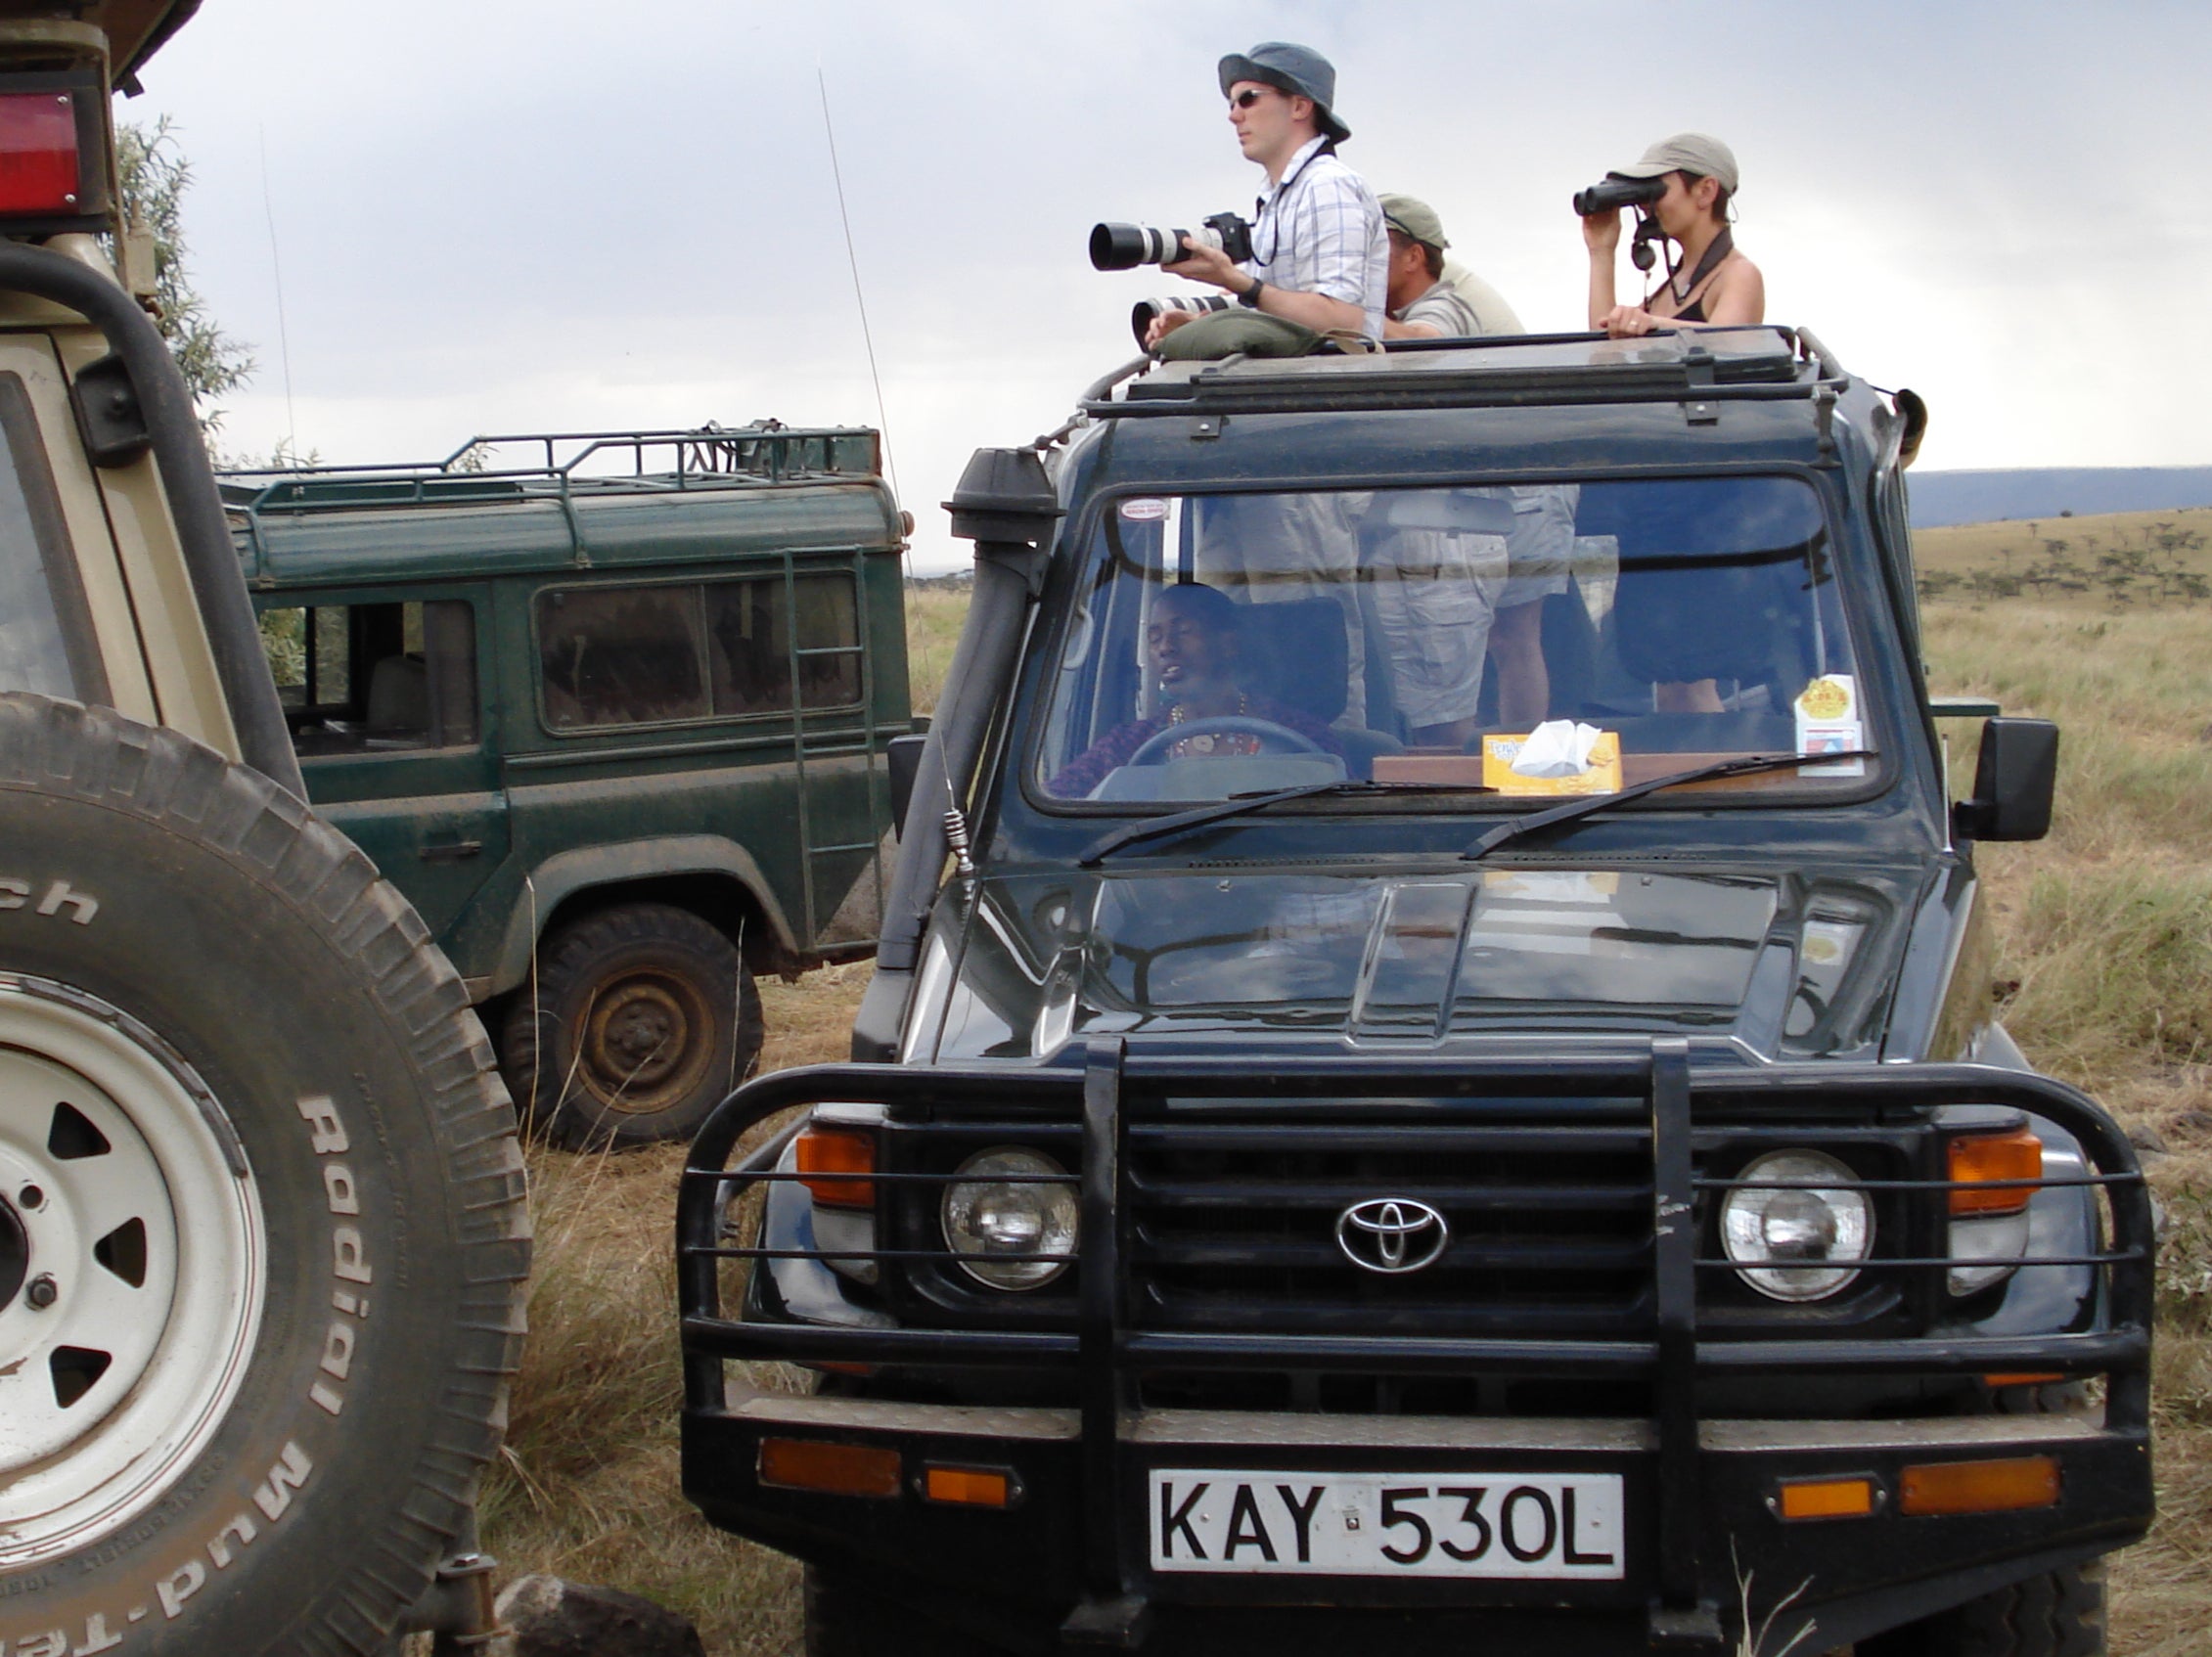 Danger zone? British tourists on safari in Kenya